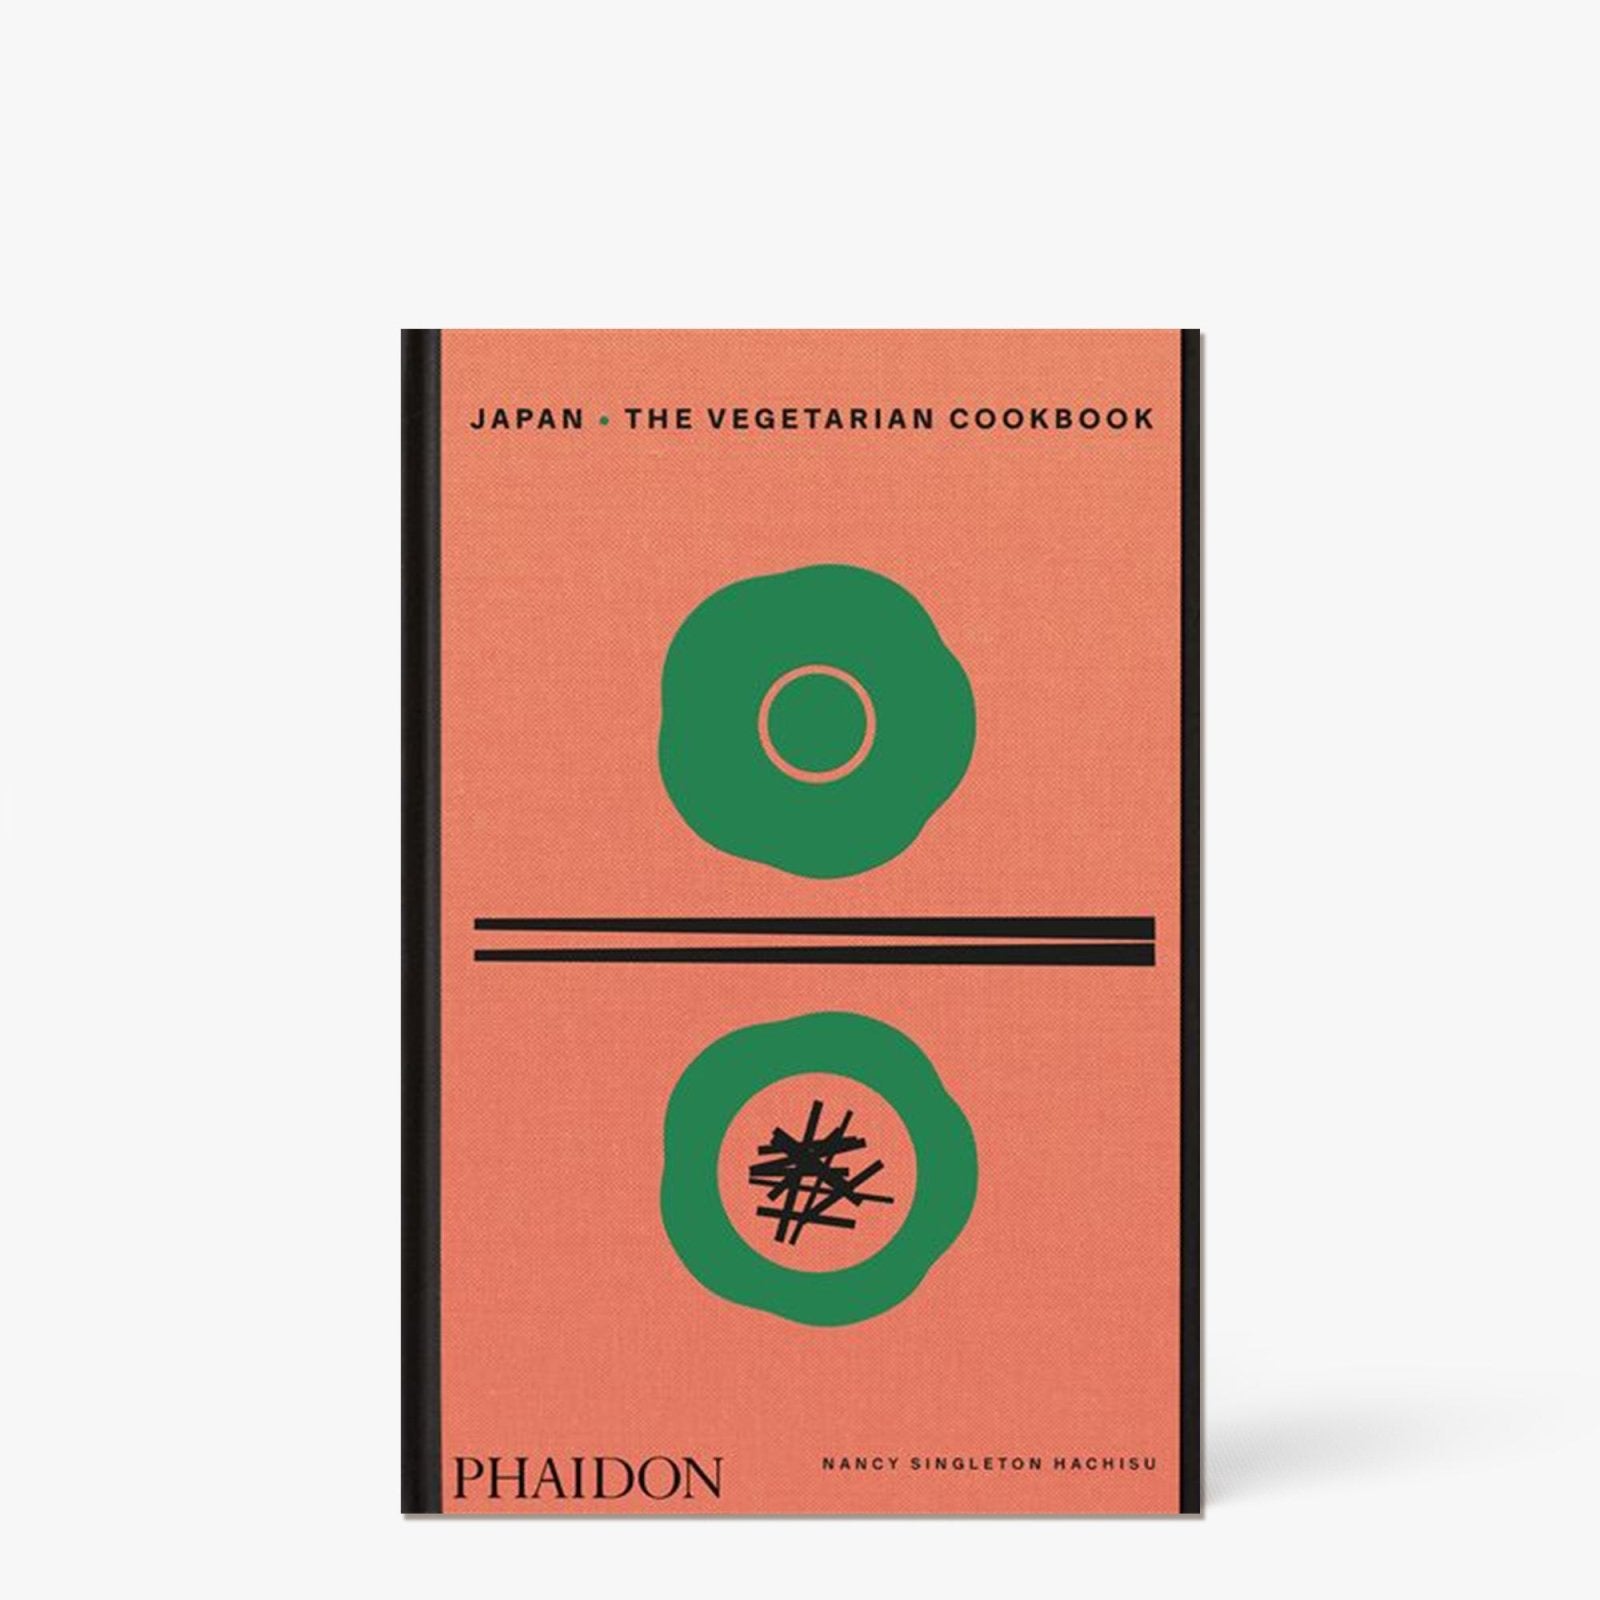 Japan: the vegetarian cookbook - Phaidon - iRASSHAi